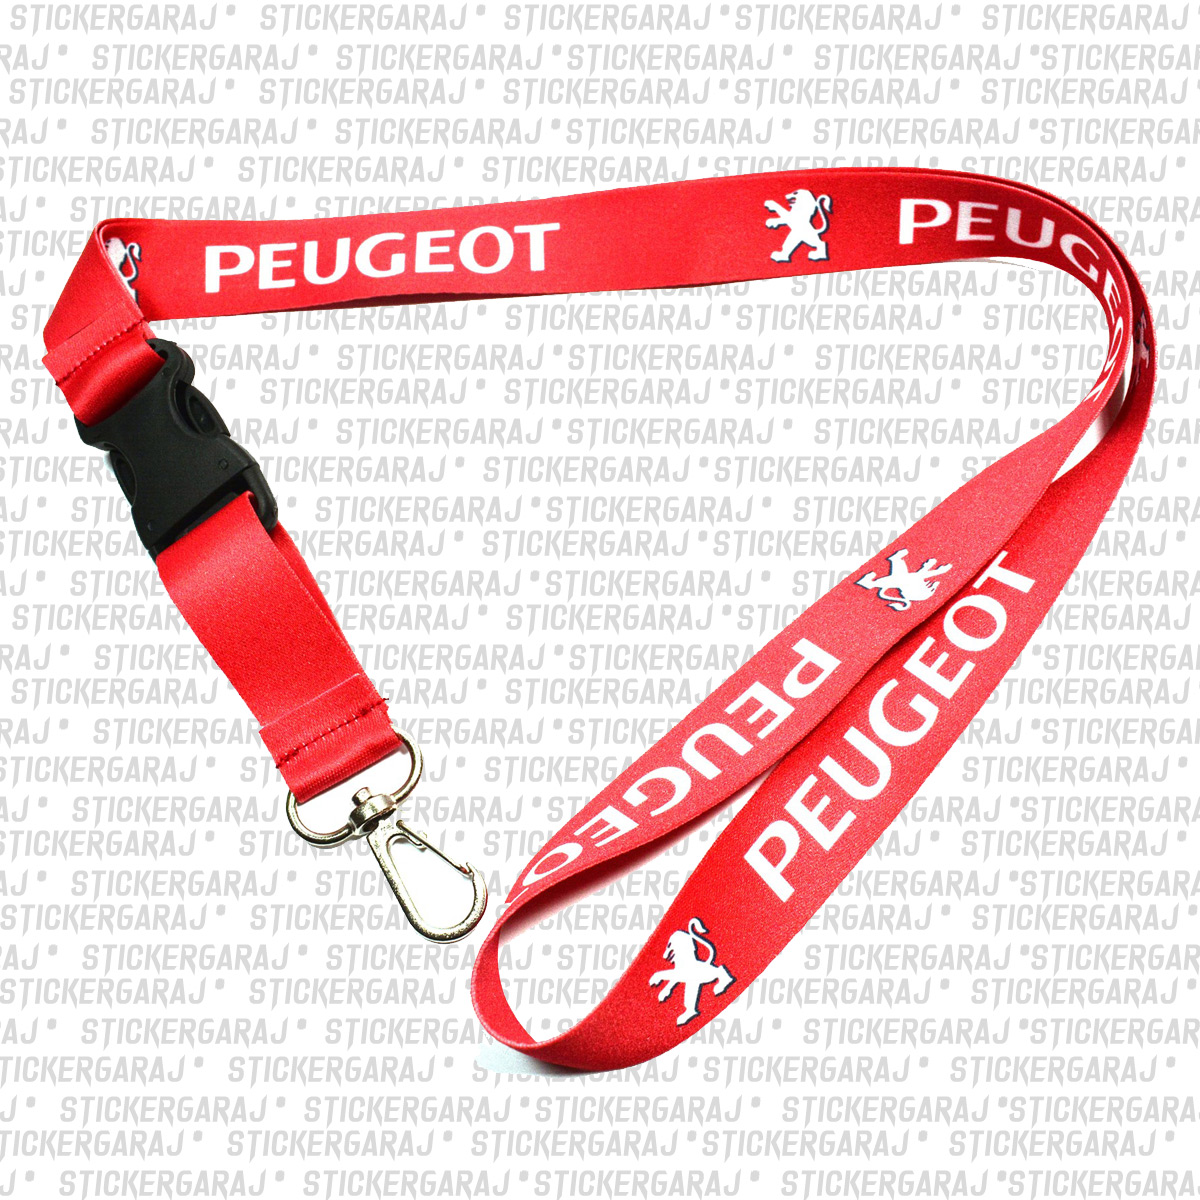 peugeot anahtarlik - Peugeot ayna boyun ipi - Baskılı